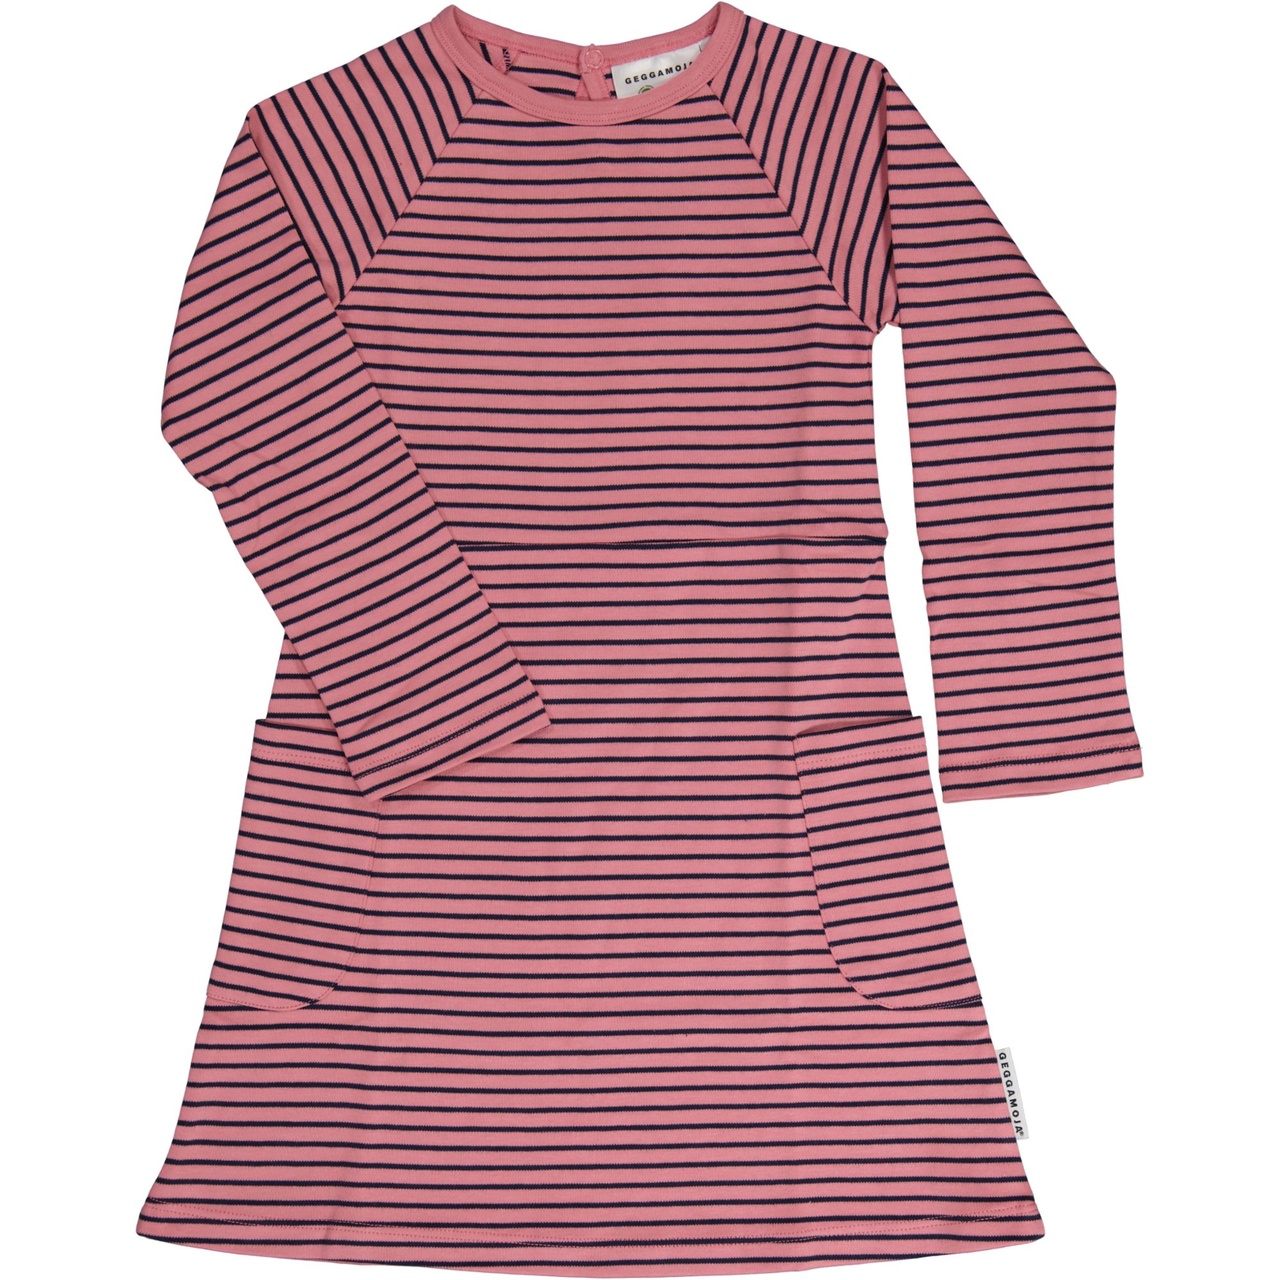 Pocket dress Pink/navy 122/128